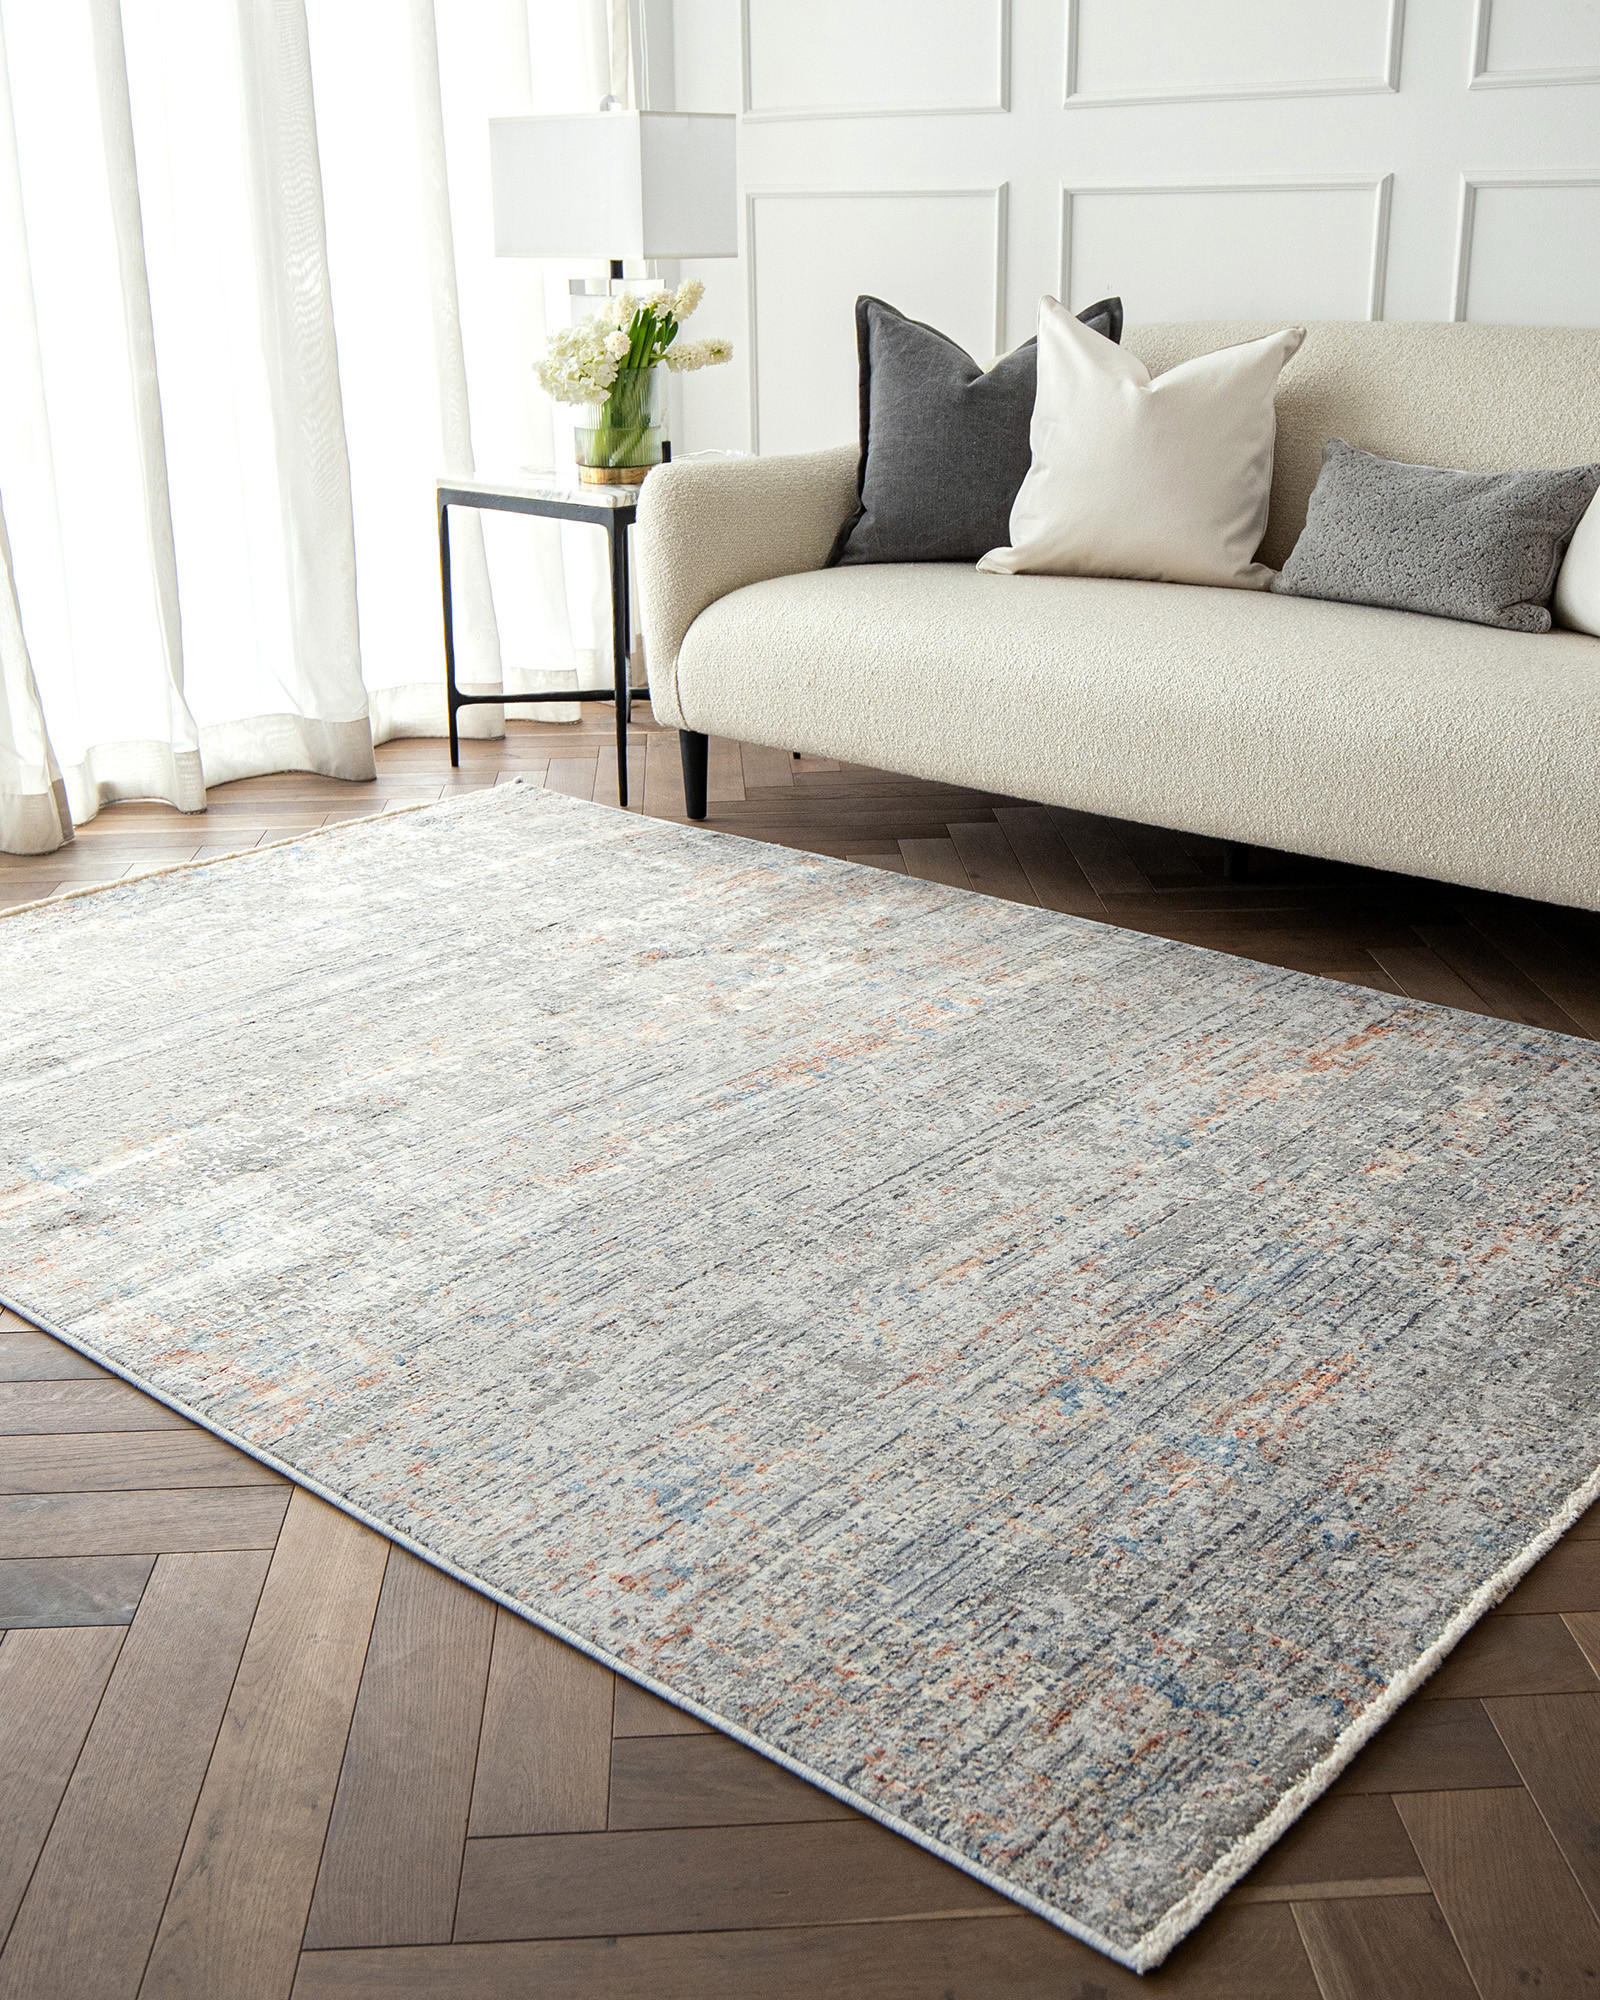 Jacob Sandy 405 x 300 cm Carpet Knot Home Designer Rug for Bedroom Living Dining Room Office Soft Non-slip Area Textile Decor